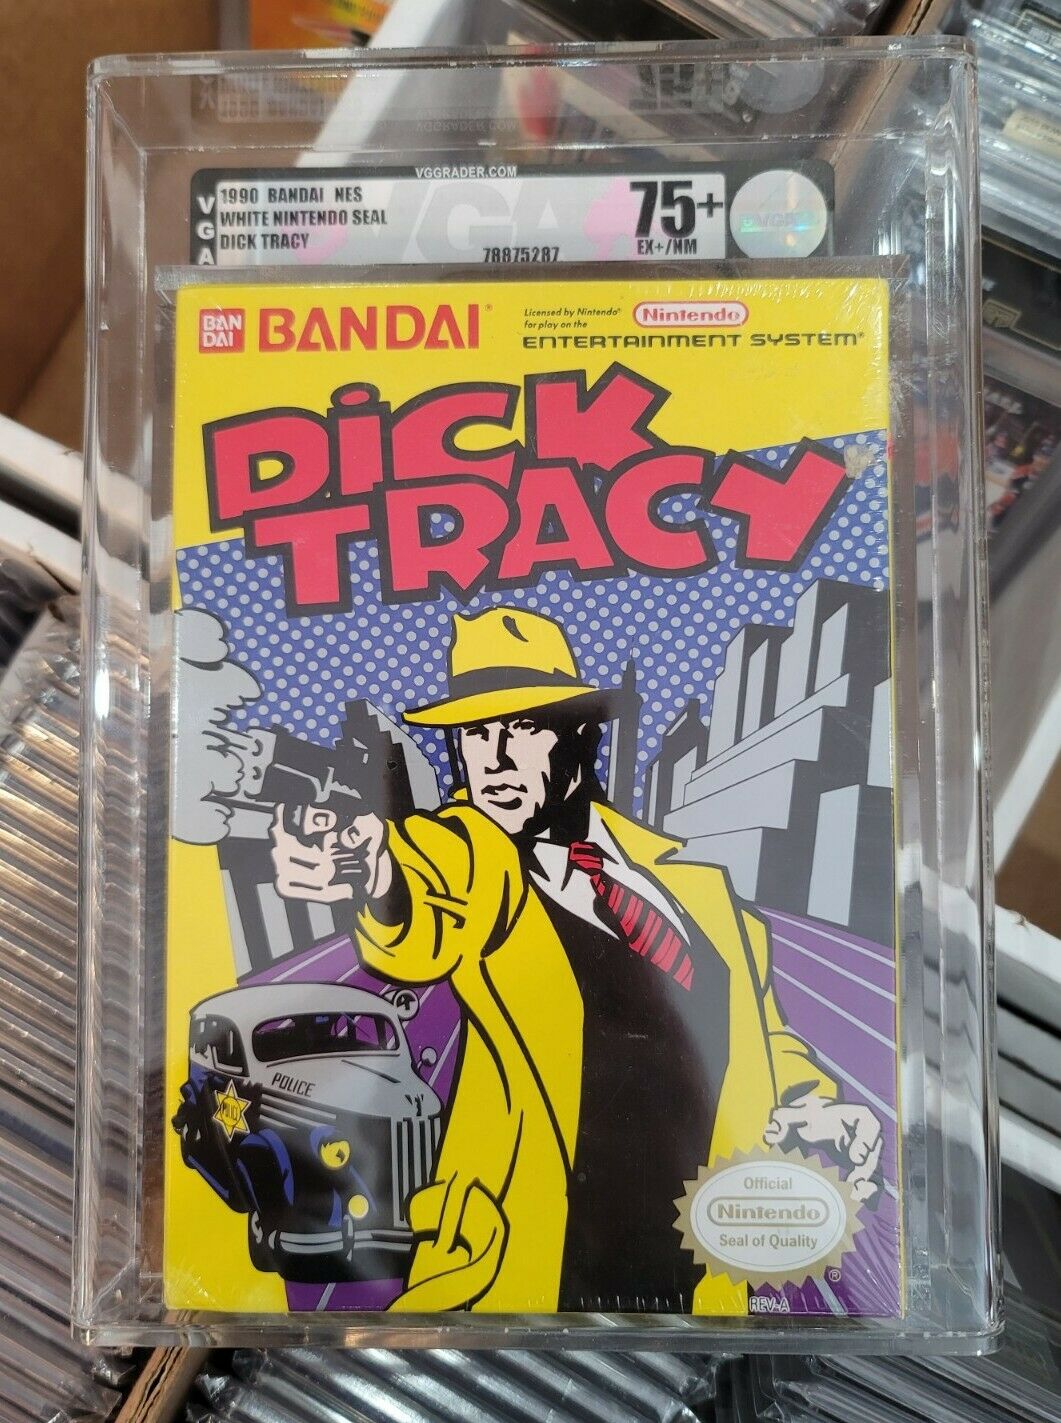 1990 Bandai Dick Tracy Original NES Nintendo Video Game Sealed, Graded VGA 75